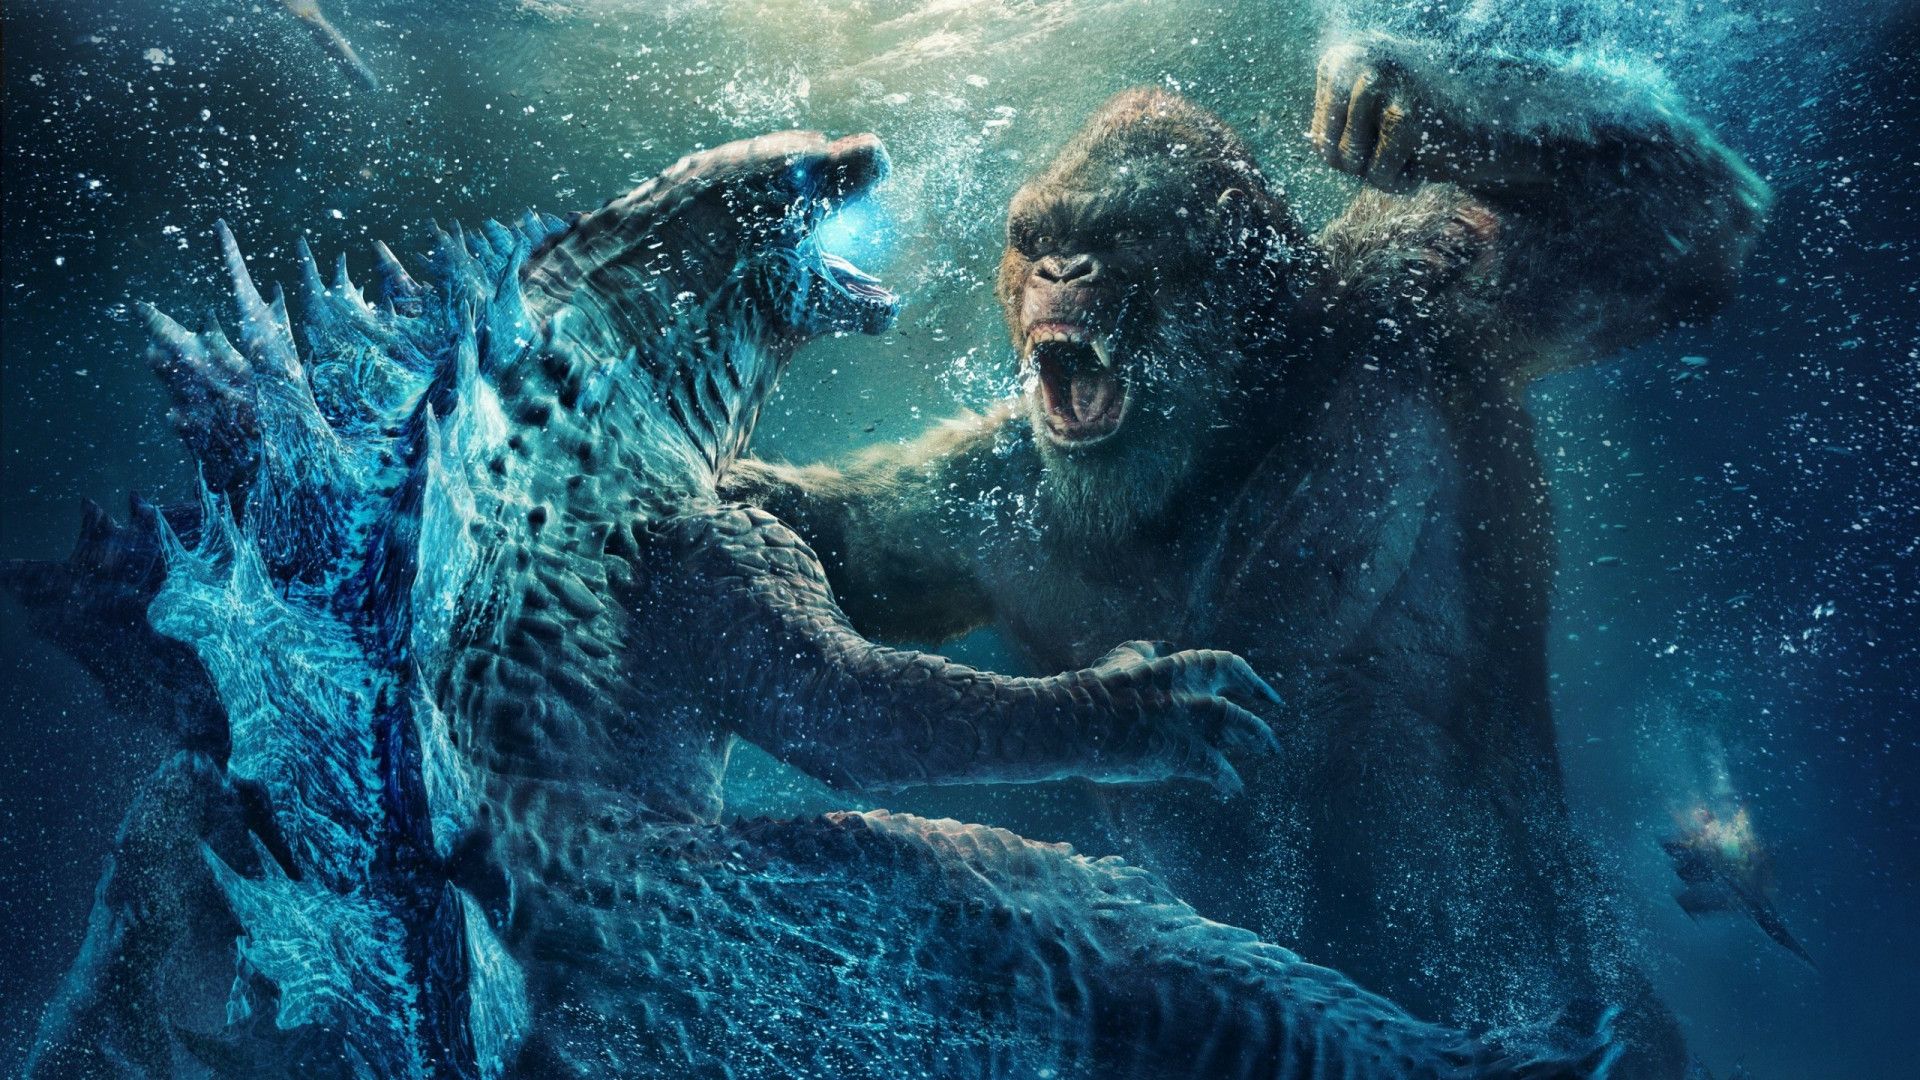 Download wallpaper: Godzilla vs Kong 2 1920x1080